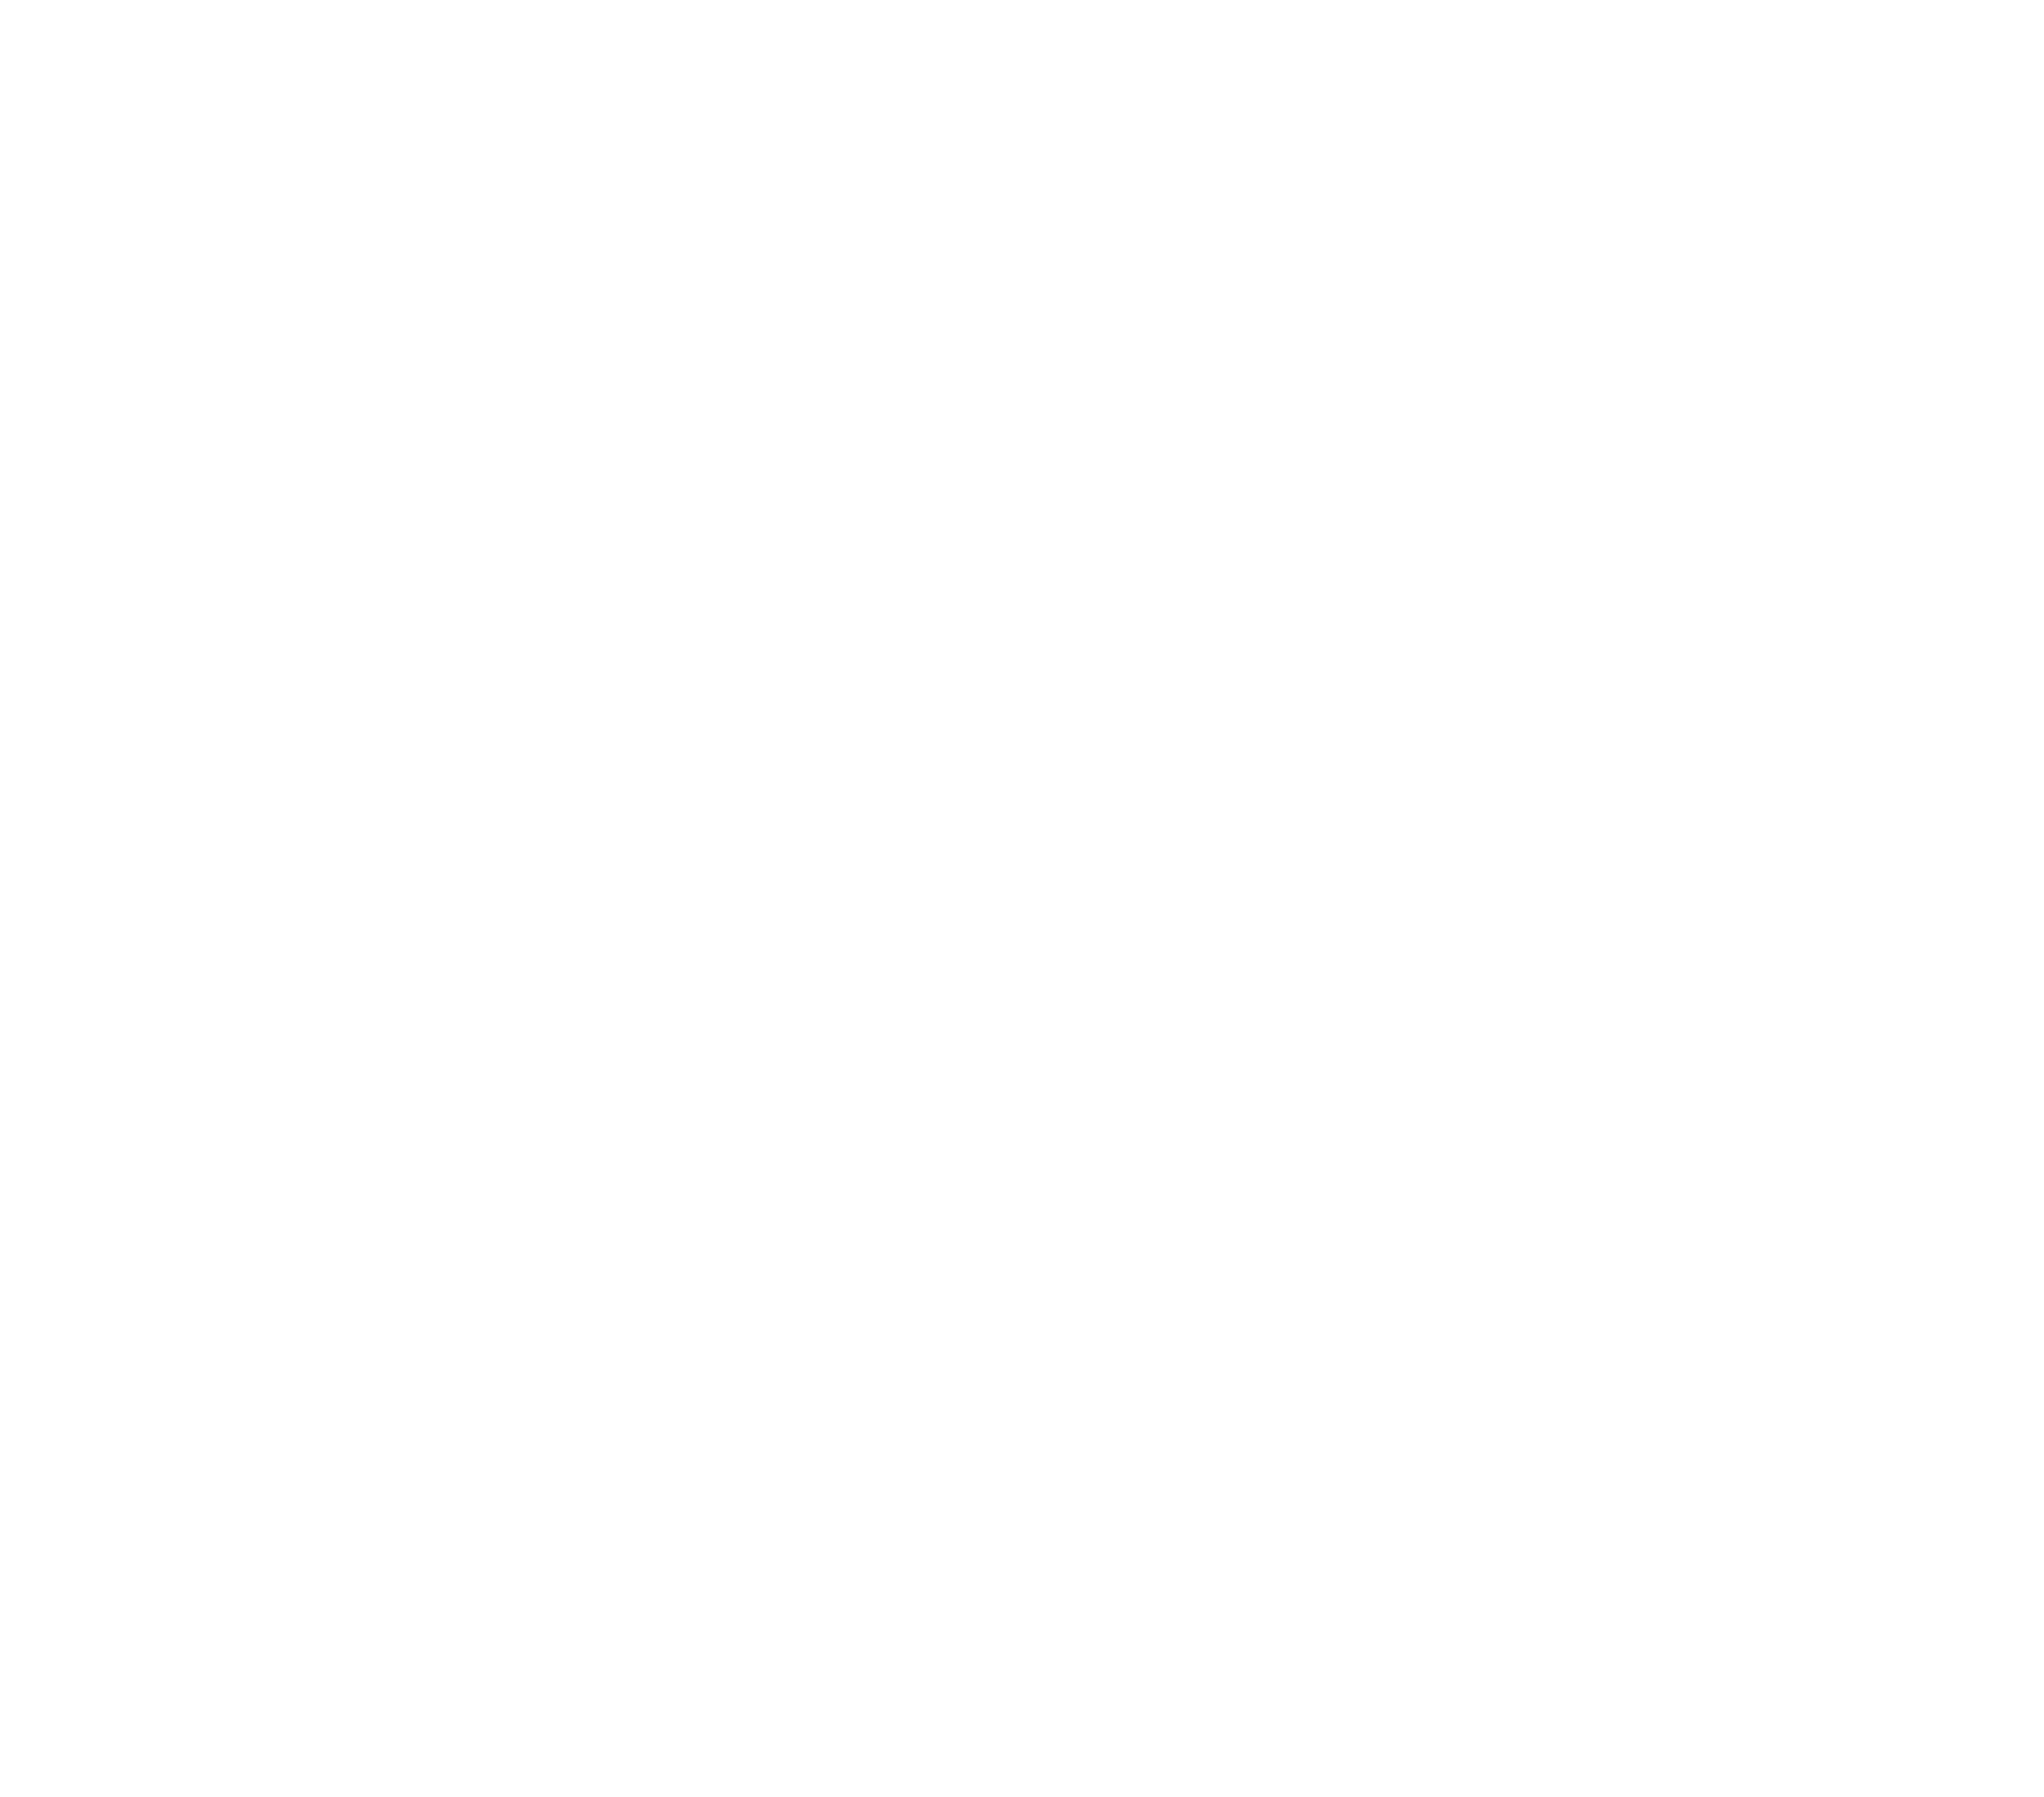 Net zero, CO2 neutral green icon. Eco friendly isolated sign